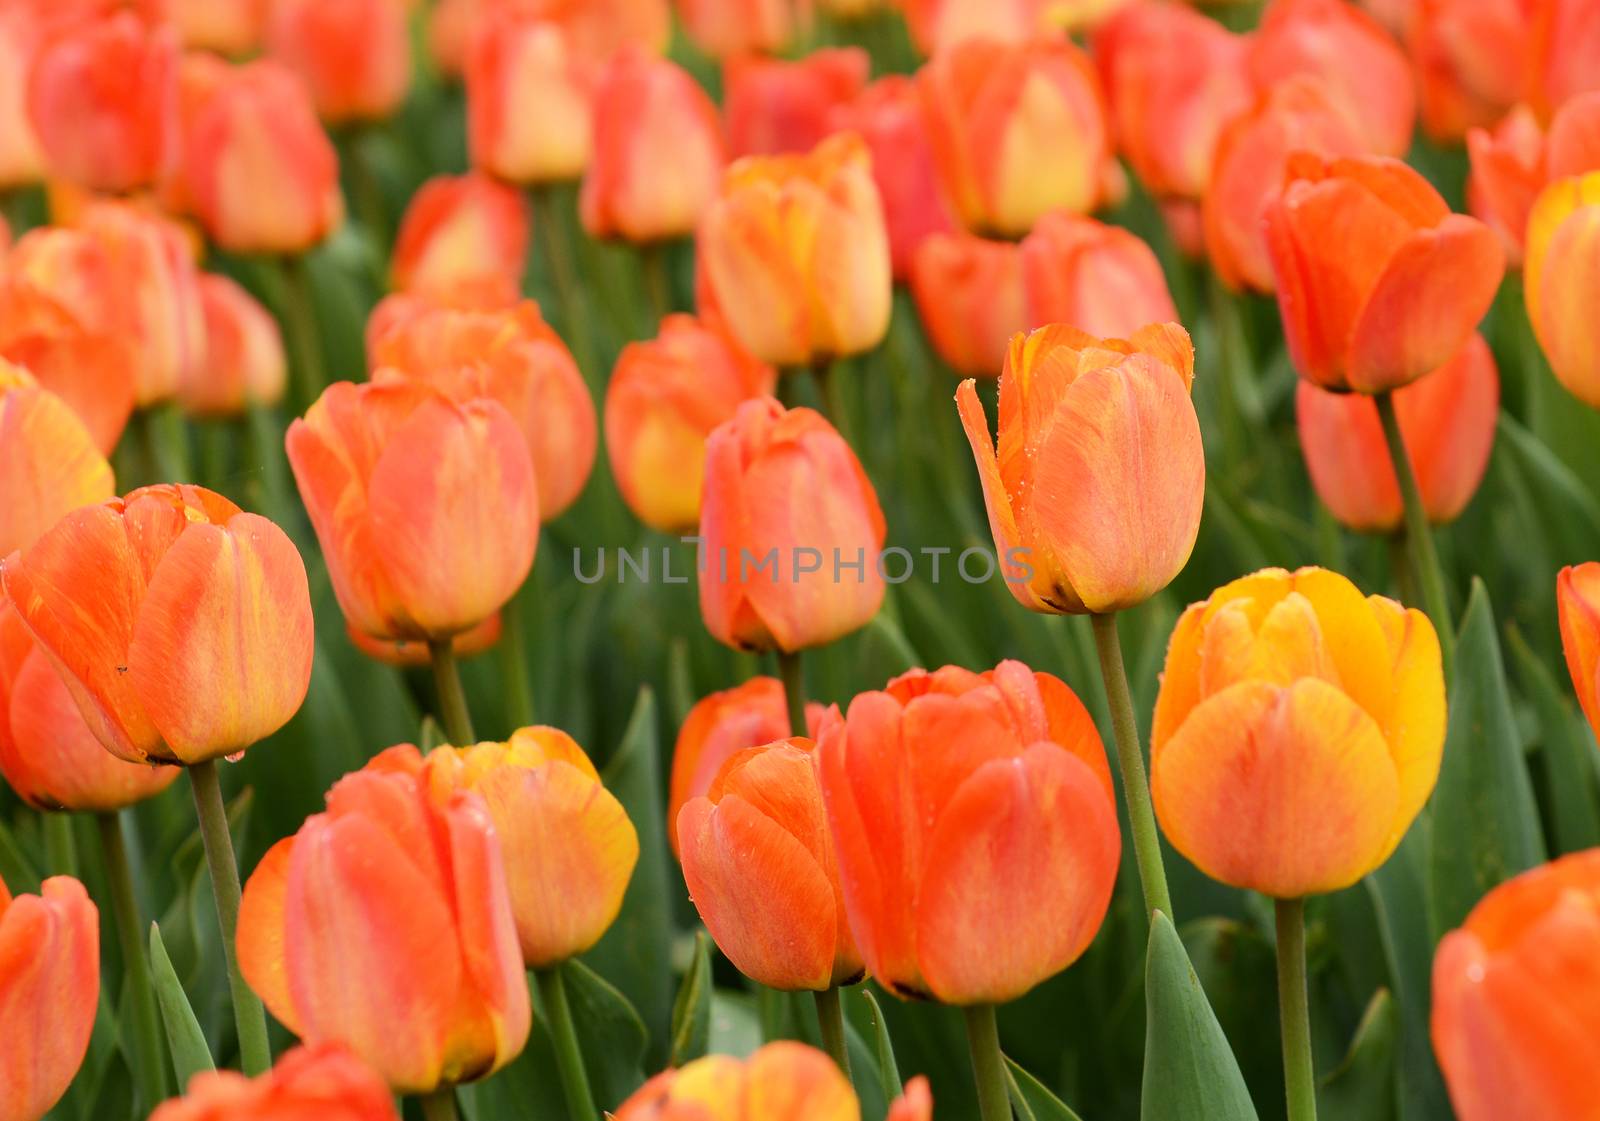 Tulips by kwasny221